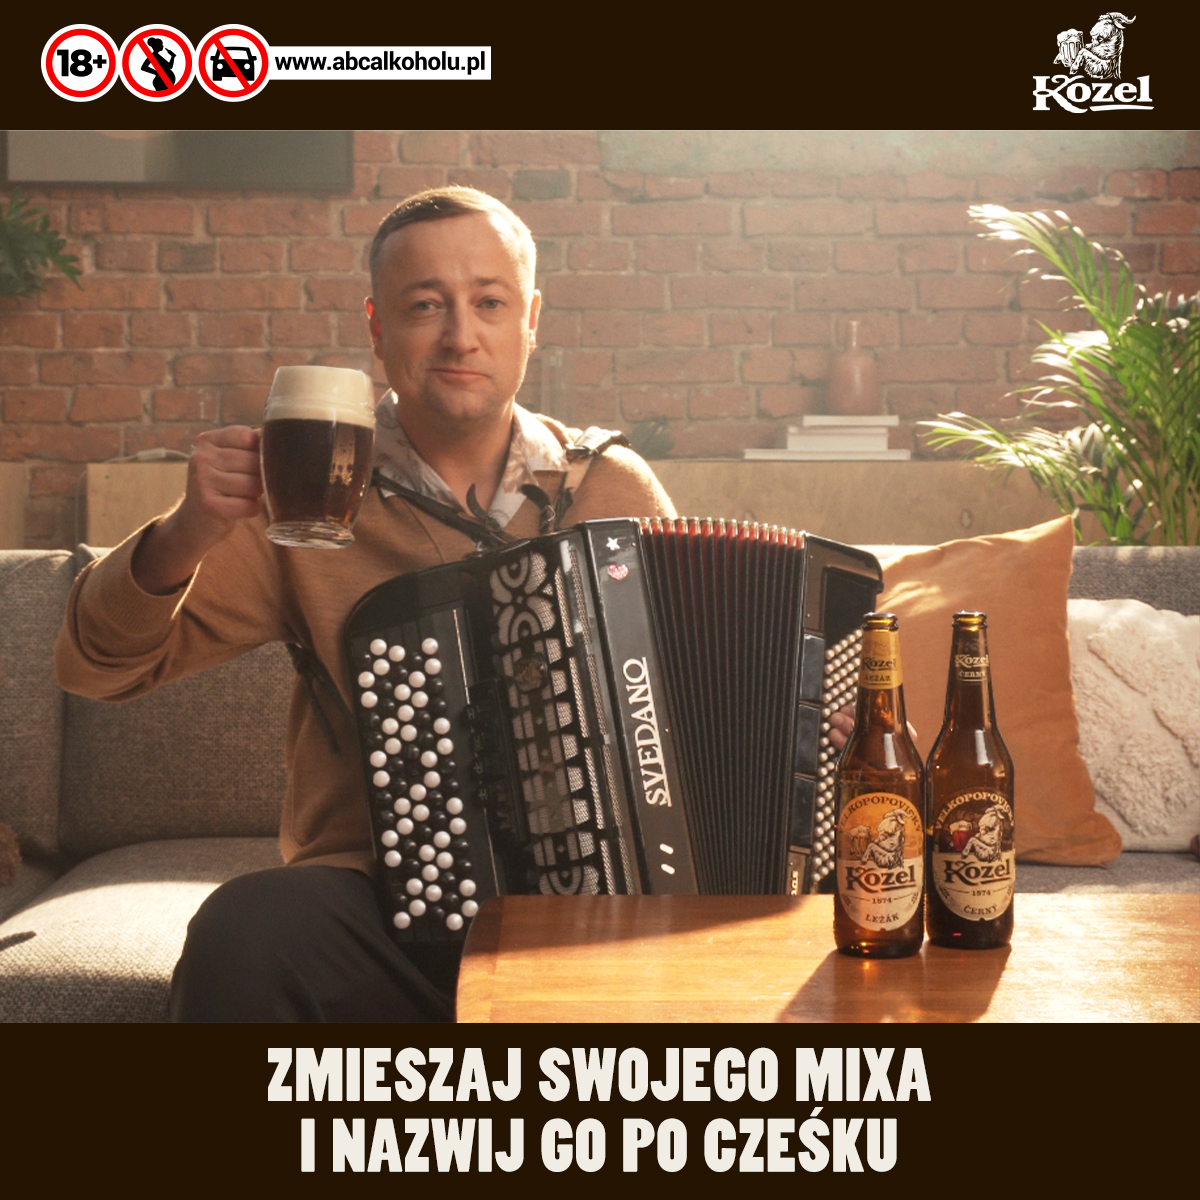 “Kozel Mix” competition launch! Czesław Mozil inspires to mix beers